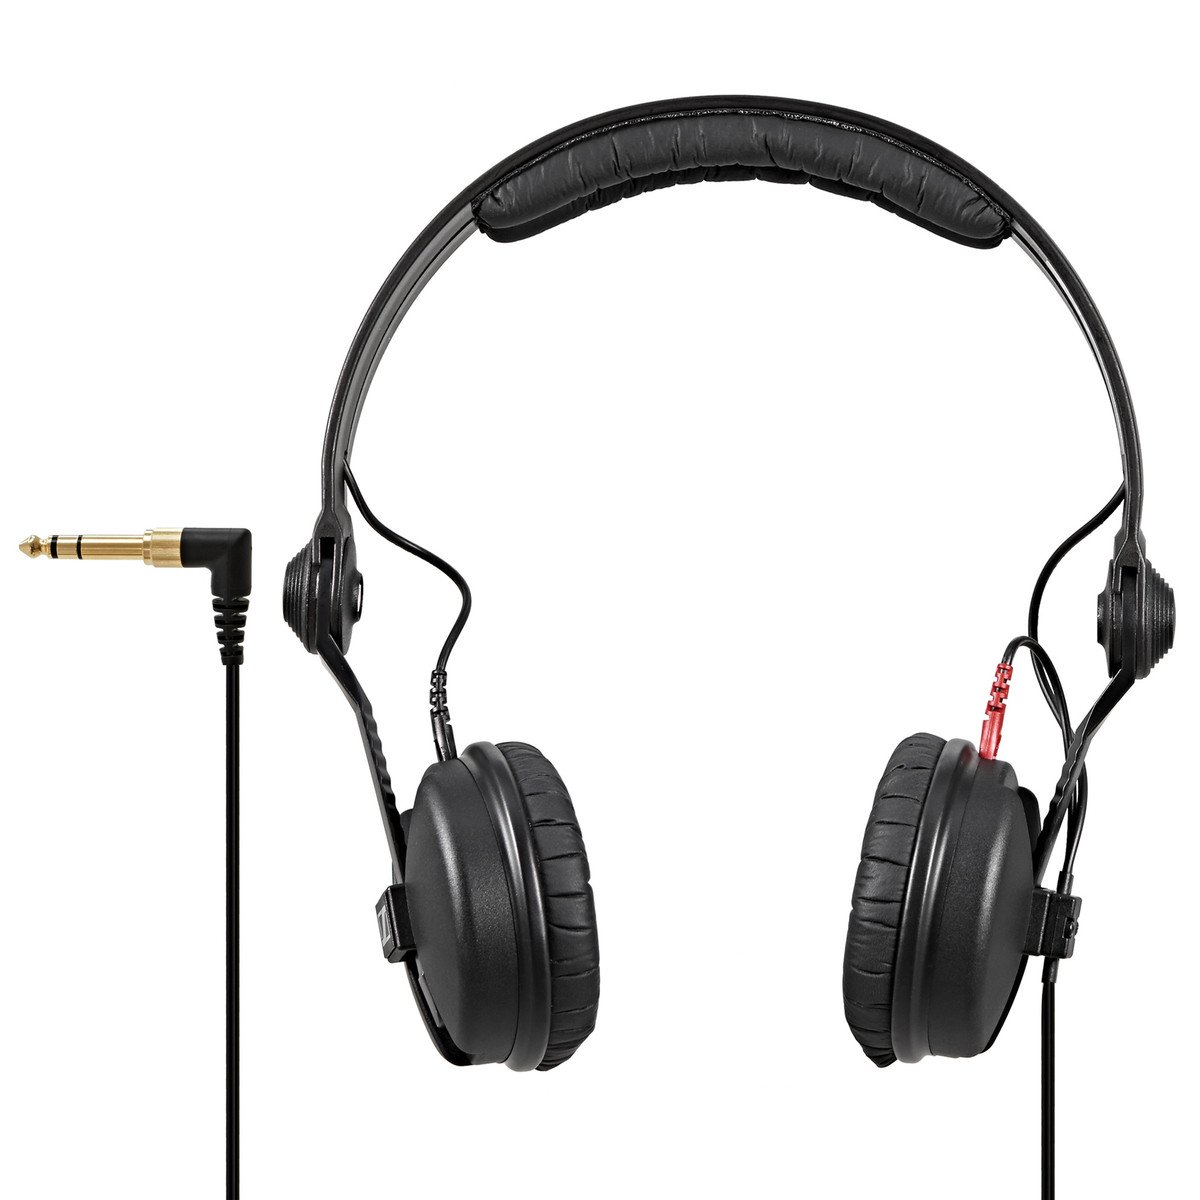 Sennheiser HD 25-II Studio Headphone Review - Sonarworks Blog